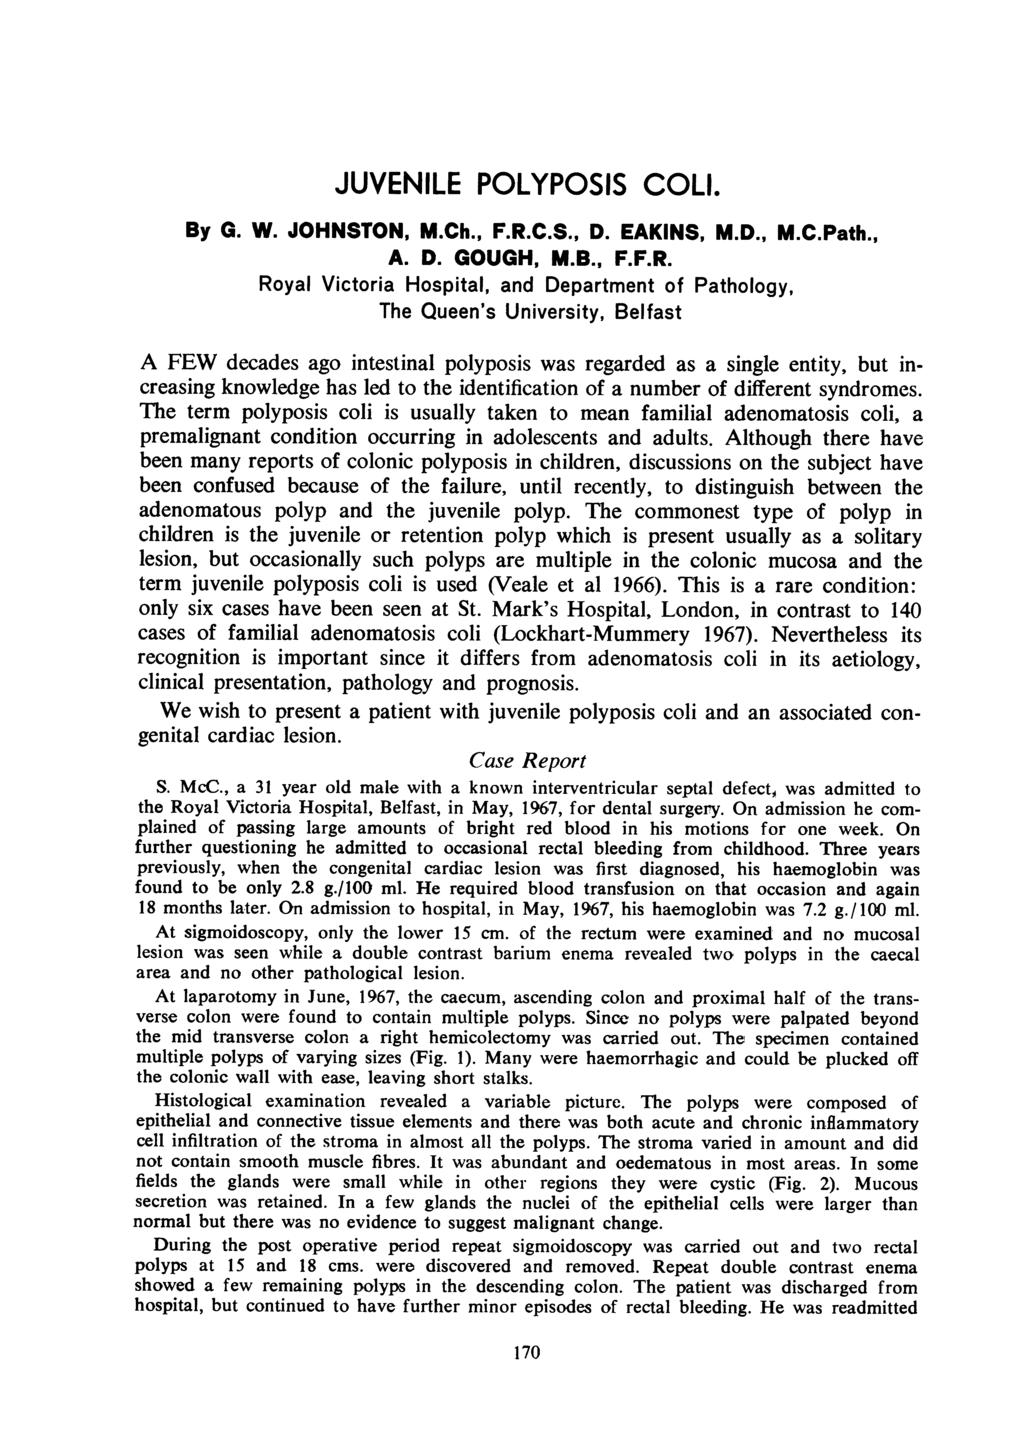 JUVENILE POLYPOSIS COLI. By G. W. JOHNSTON, M.Ch., F.R.